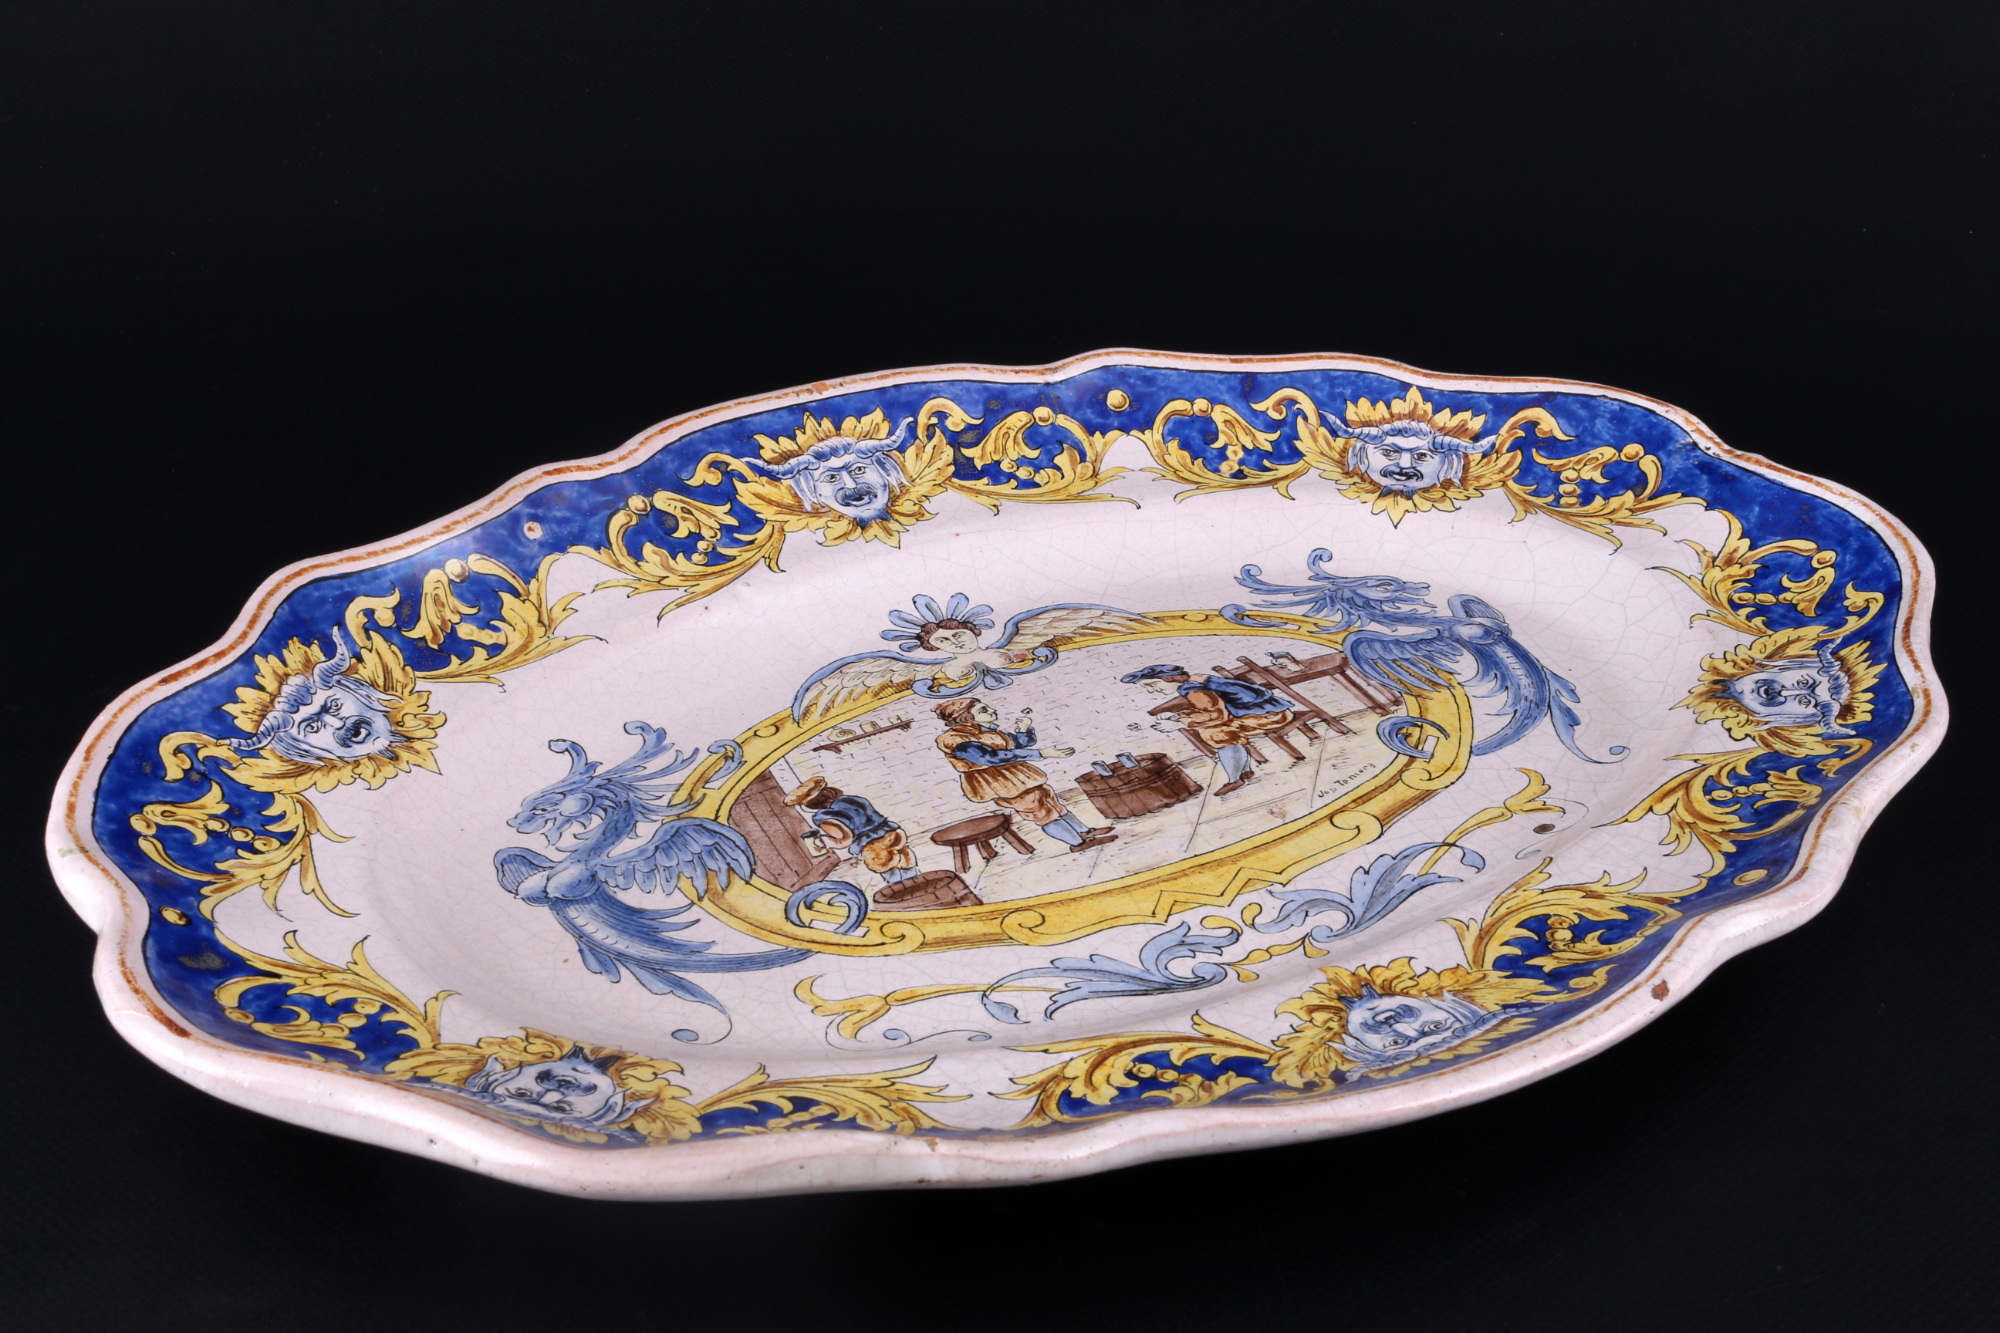 Niederlande 18. / 19. Jahrhundert Prunkplatte, dutch ceramic splendor platter, - Image 3 of 4